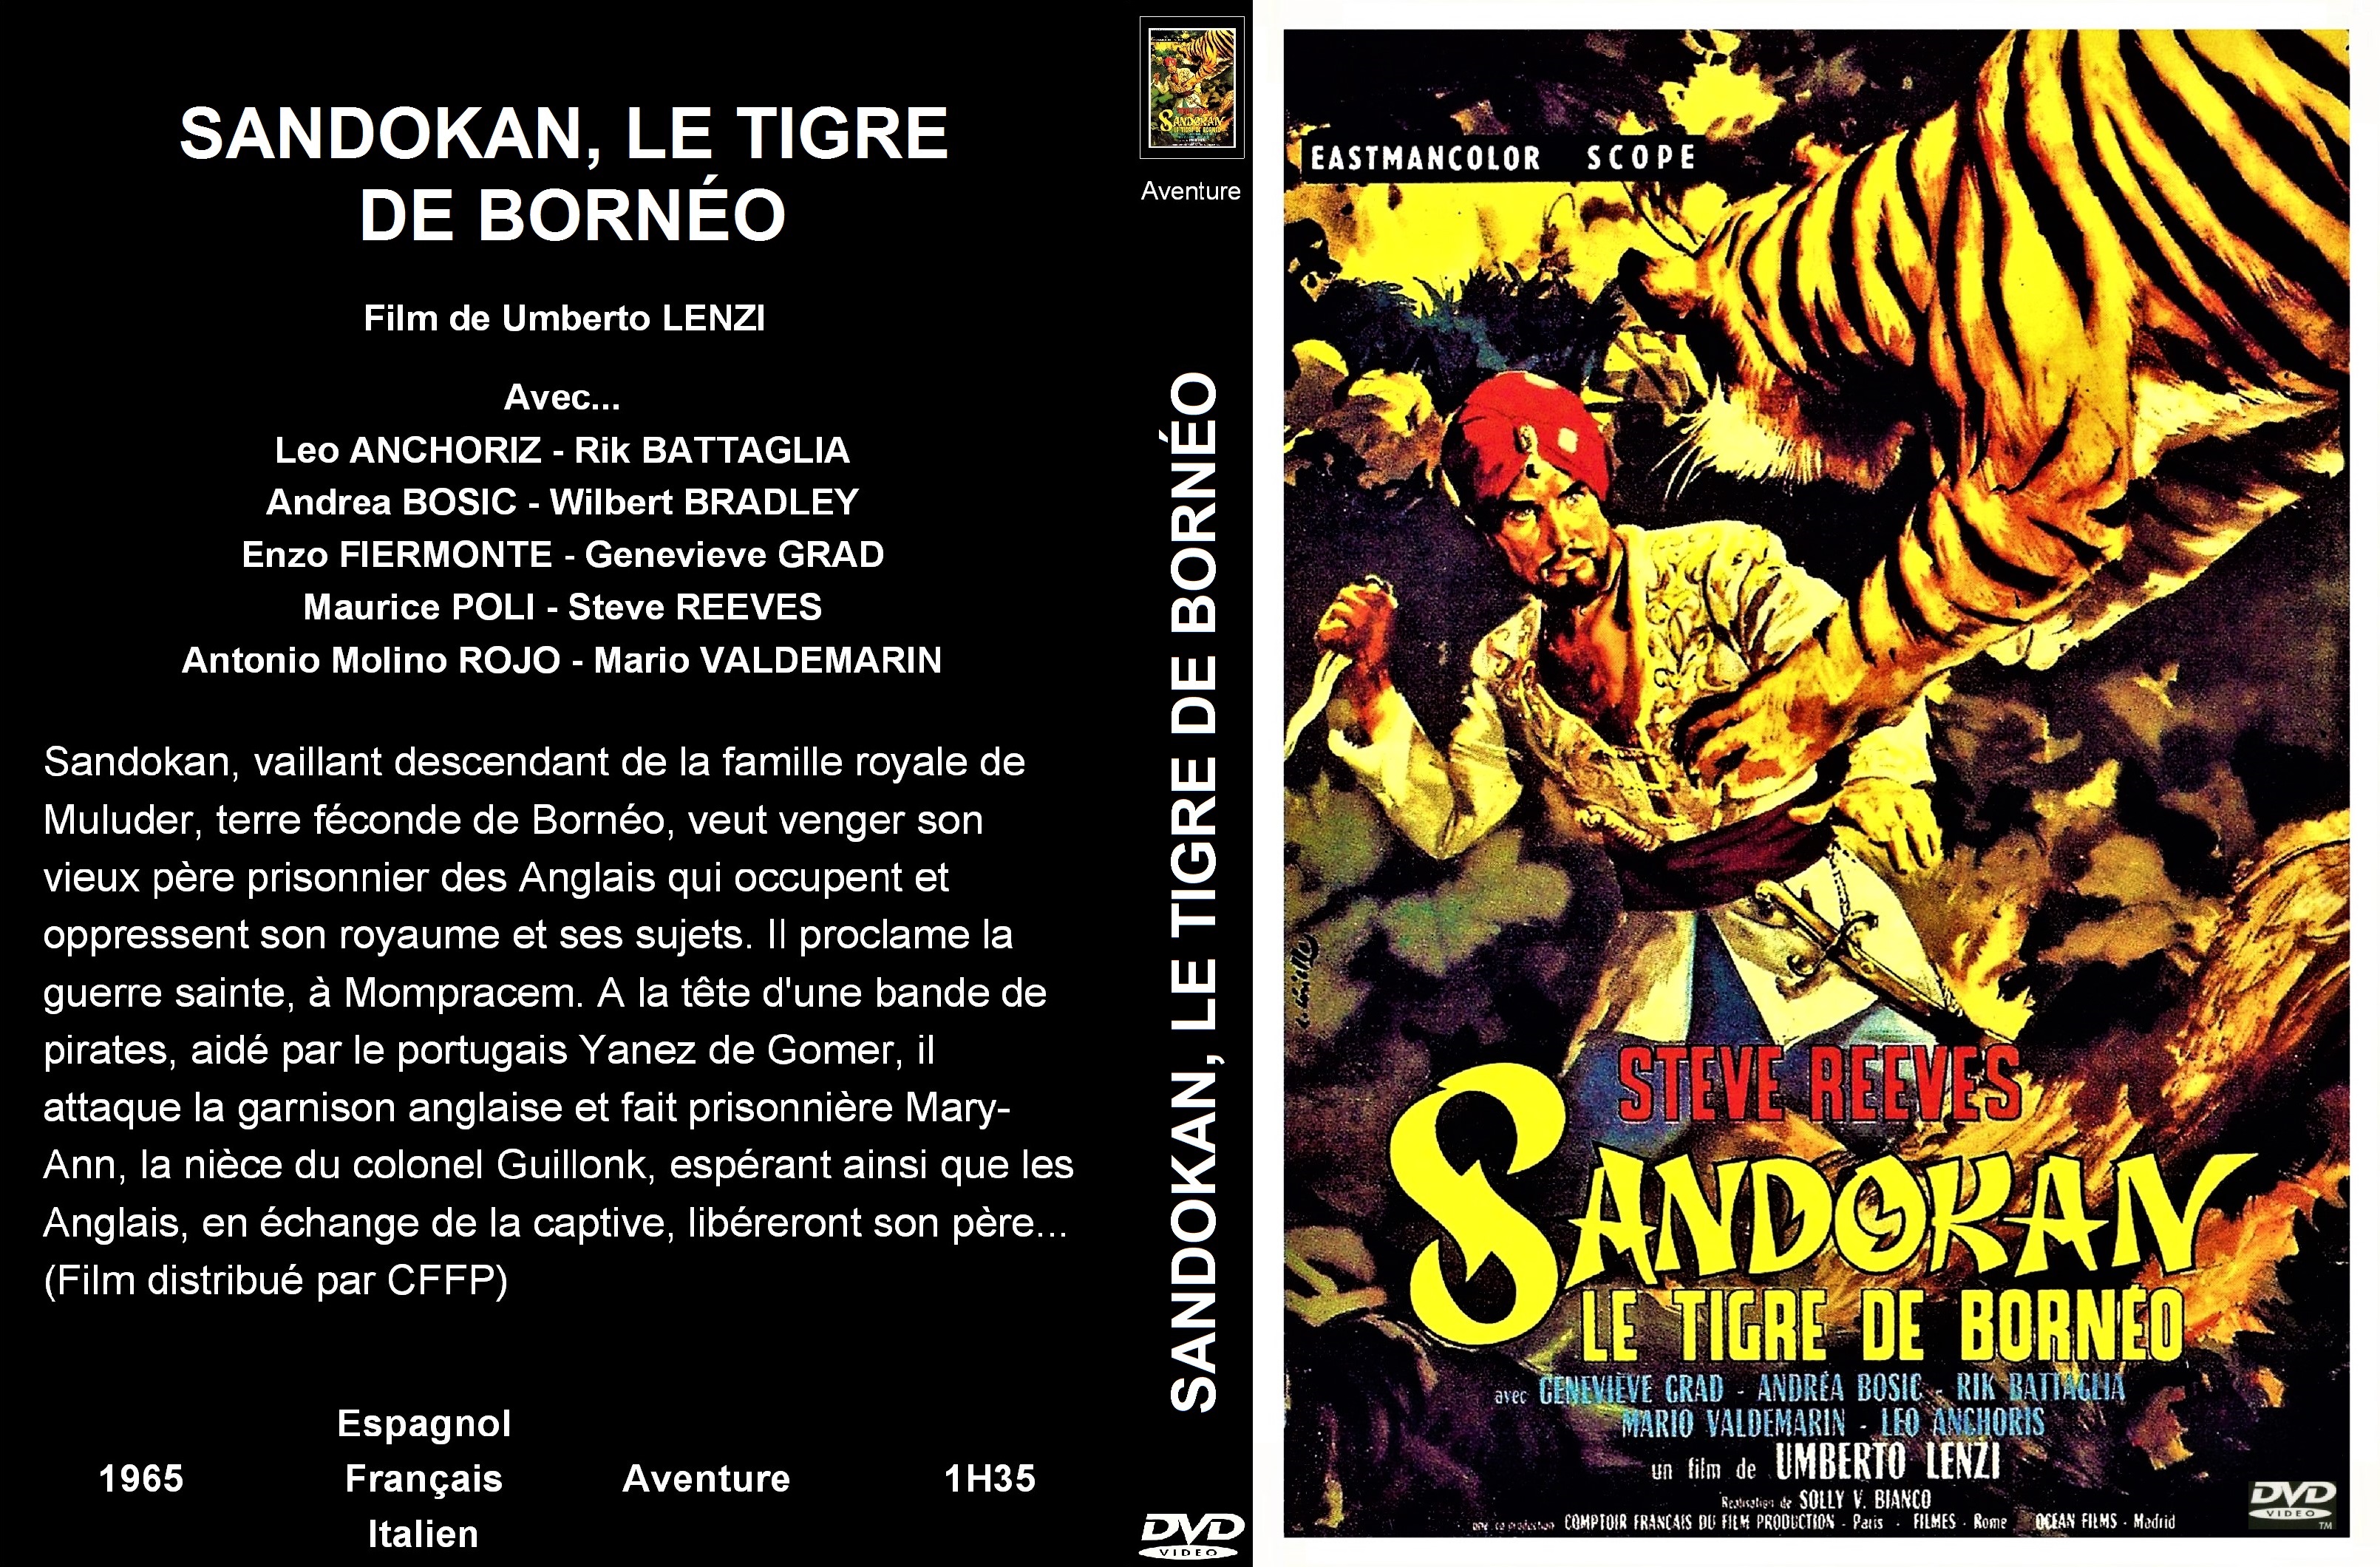 Jaquette DVD Sandokan le tigre de borneo custom